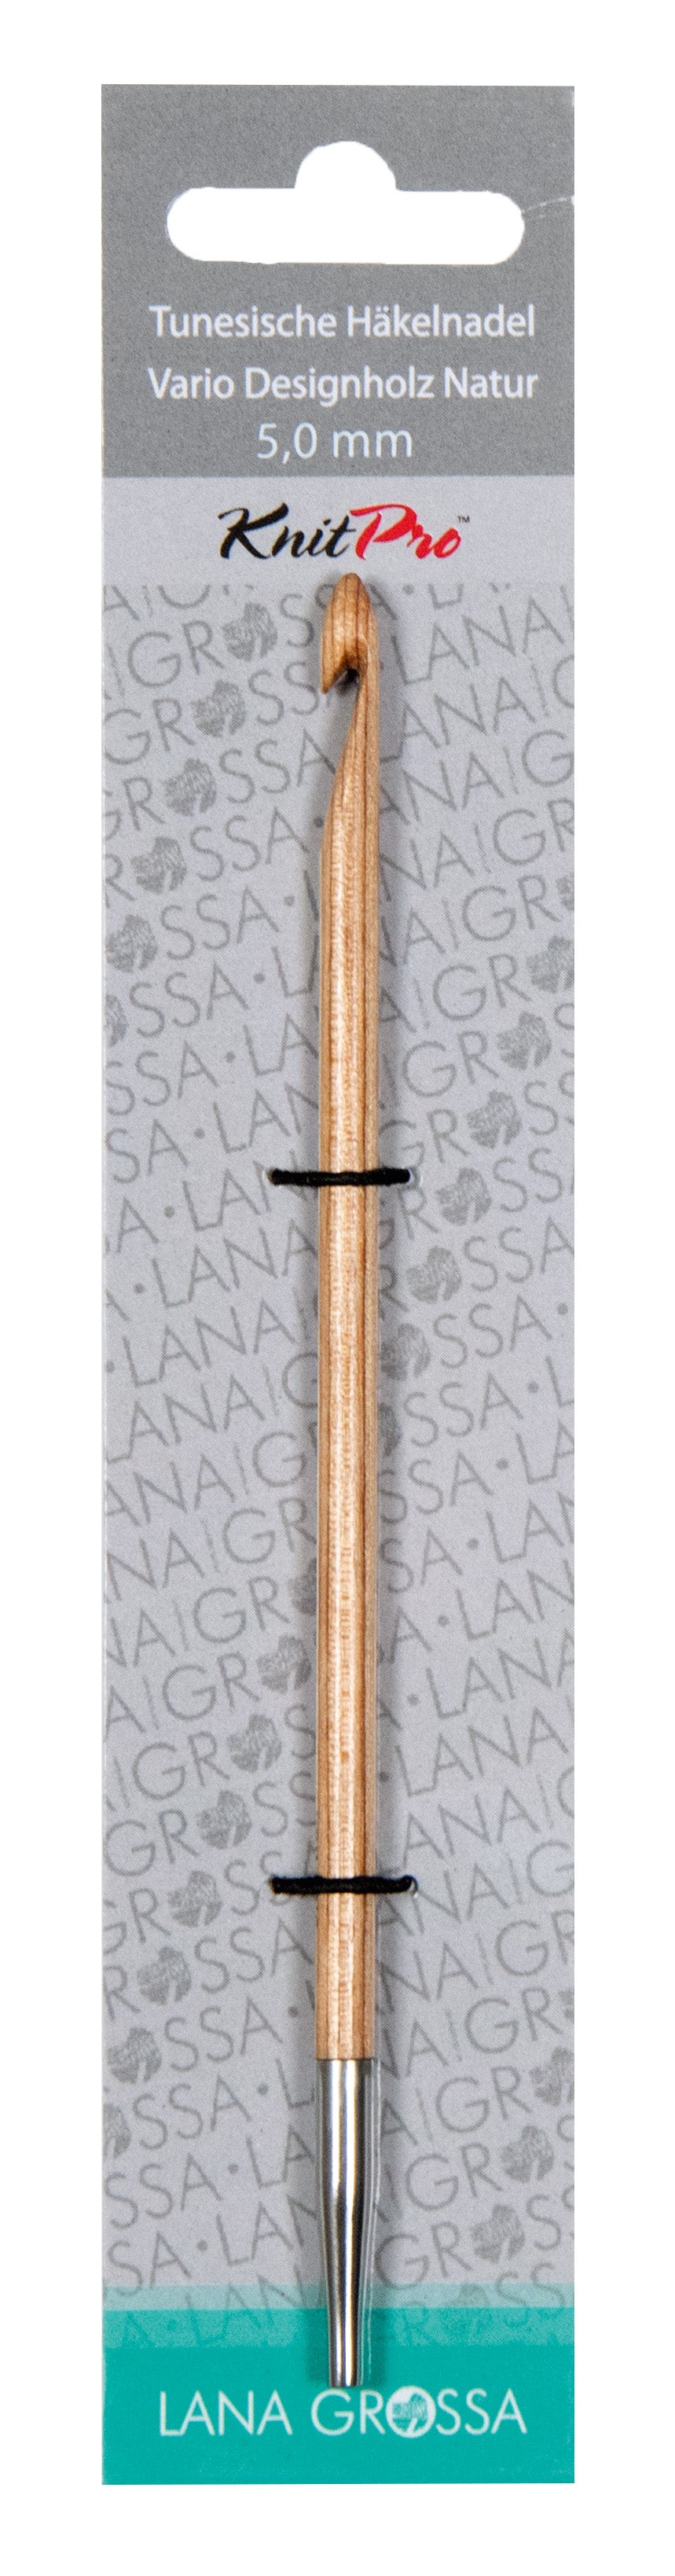 Lana Grossa tunesische Häkelnadel Vario 3,5mm